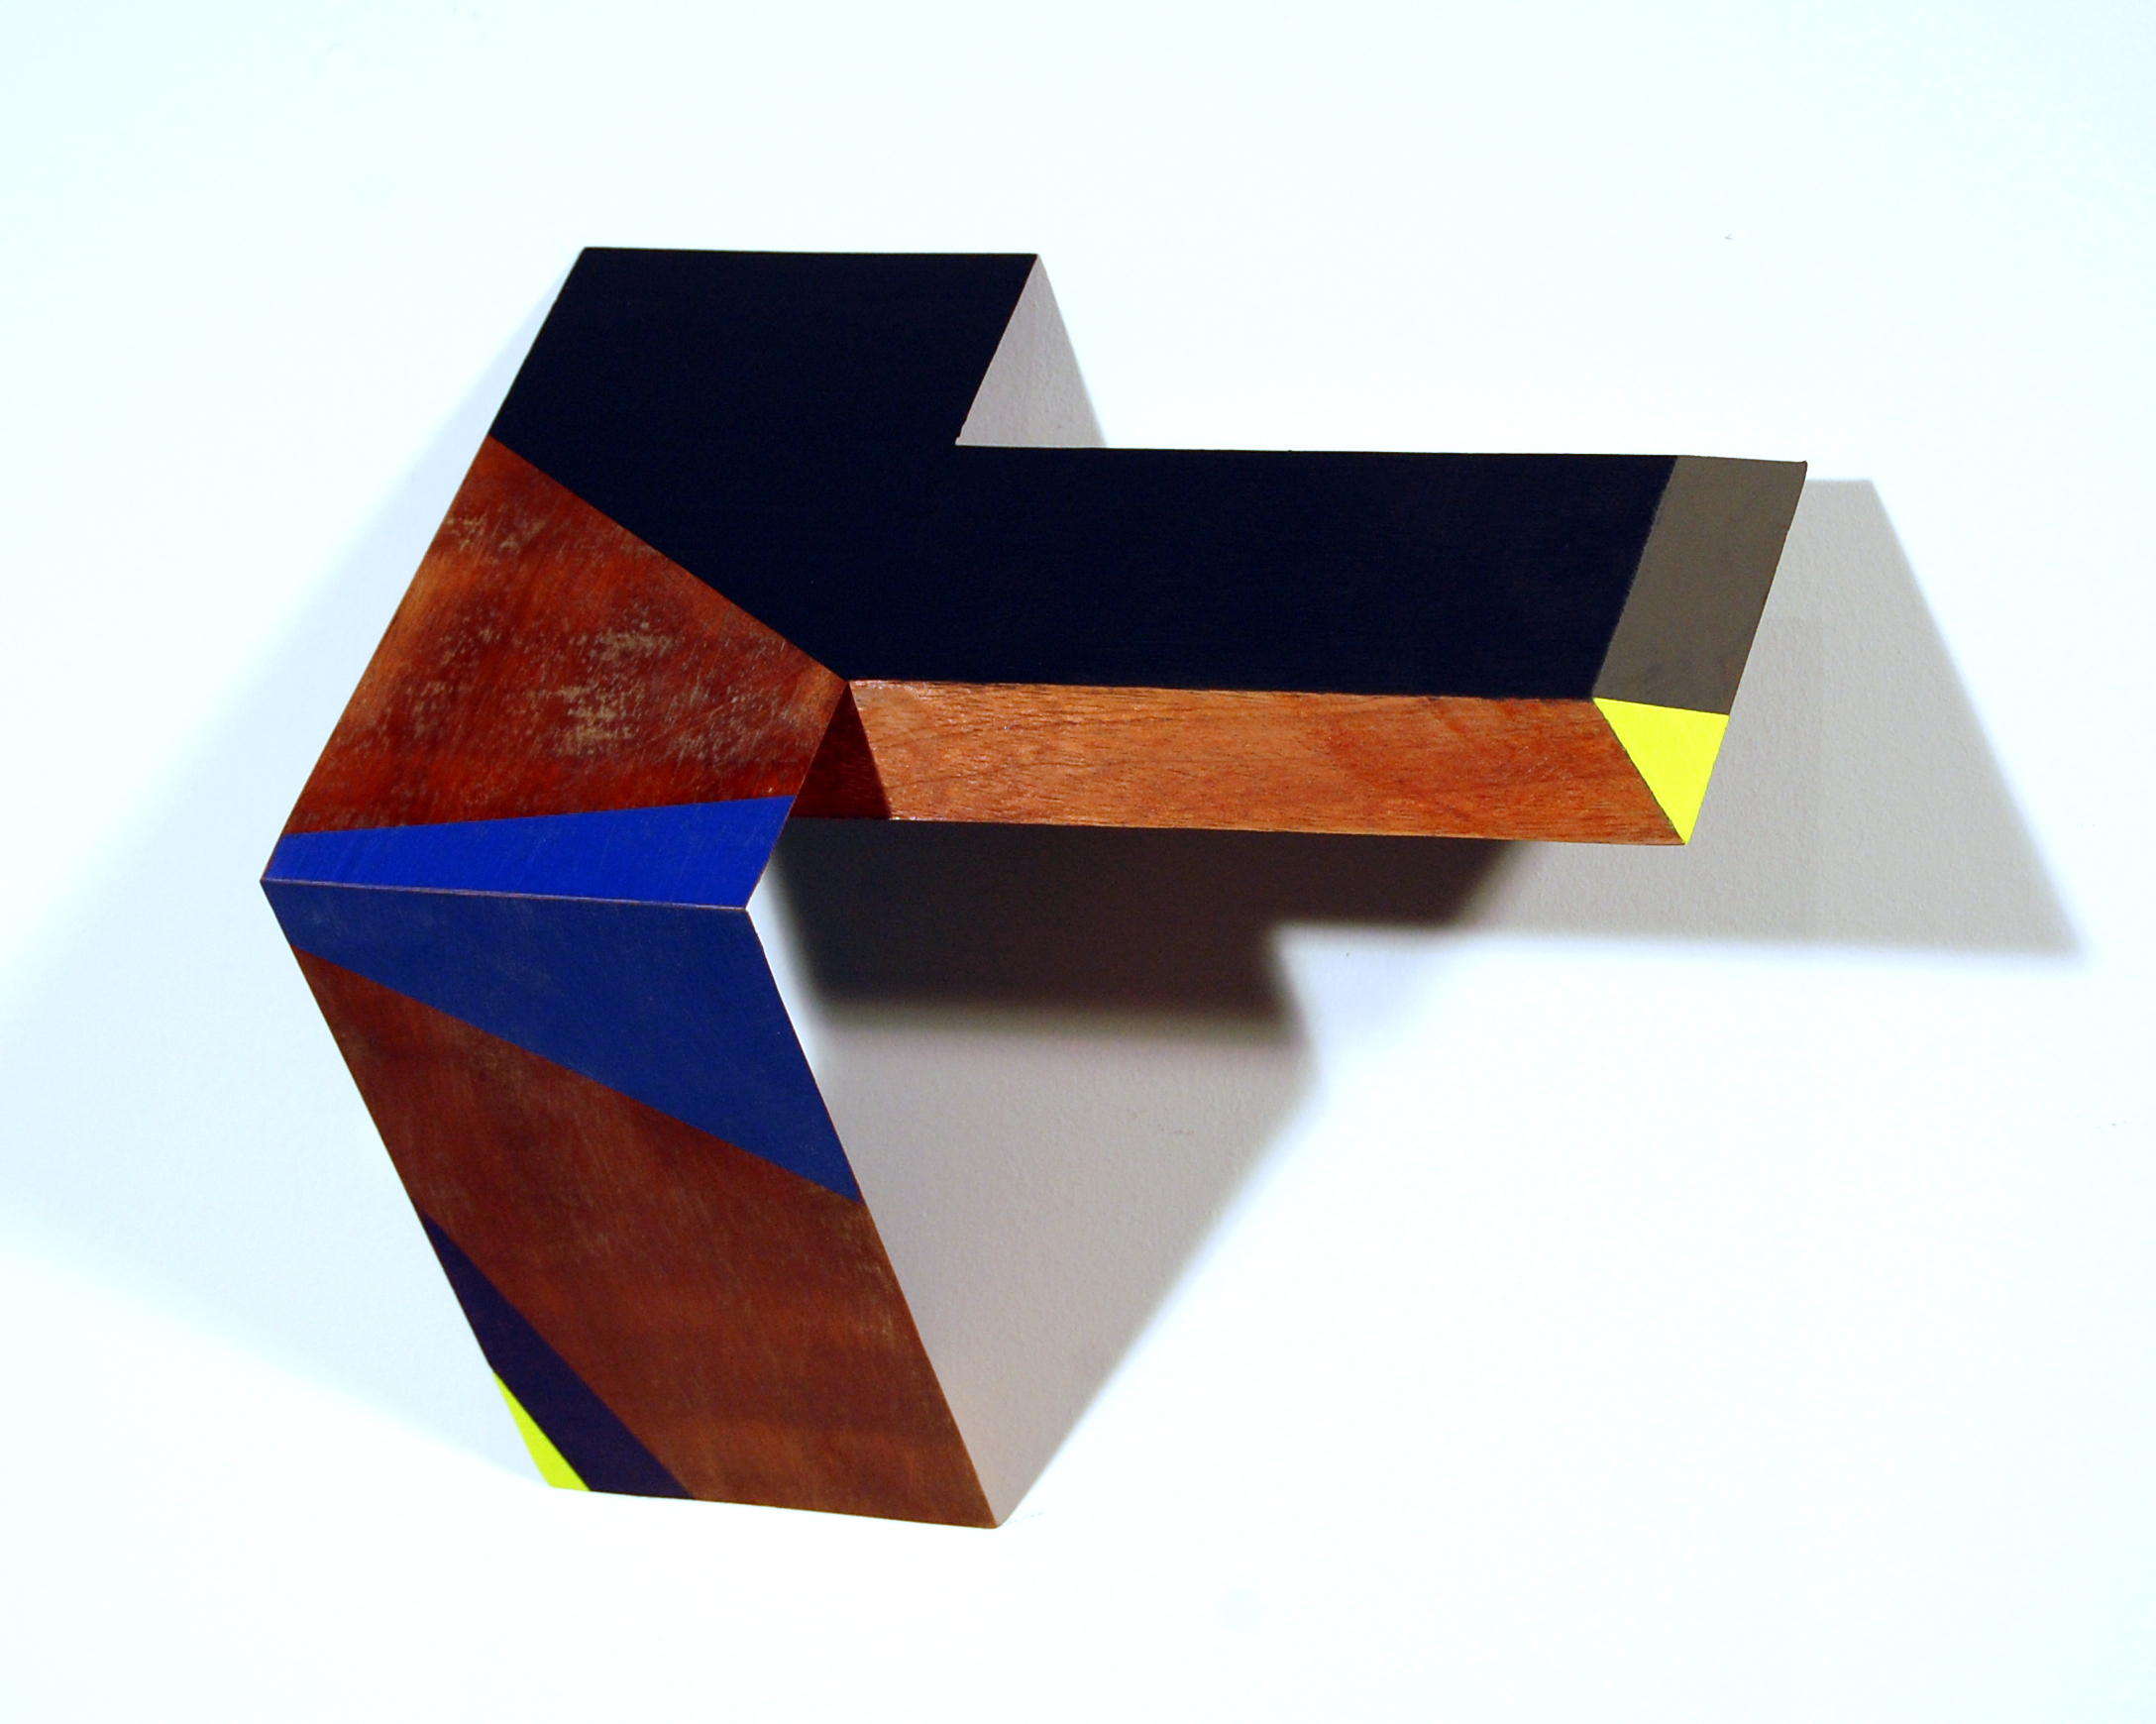  Puzzle #88  Acrylic and Brazilian cherry – Unique - 201420” x 12” x 6” / 51 x 30 x 15 cm 